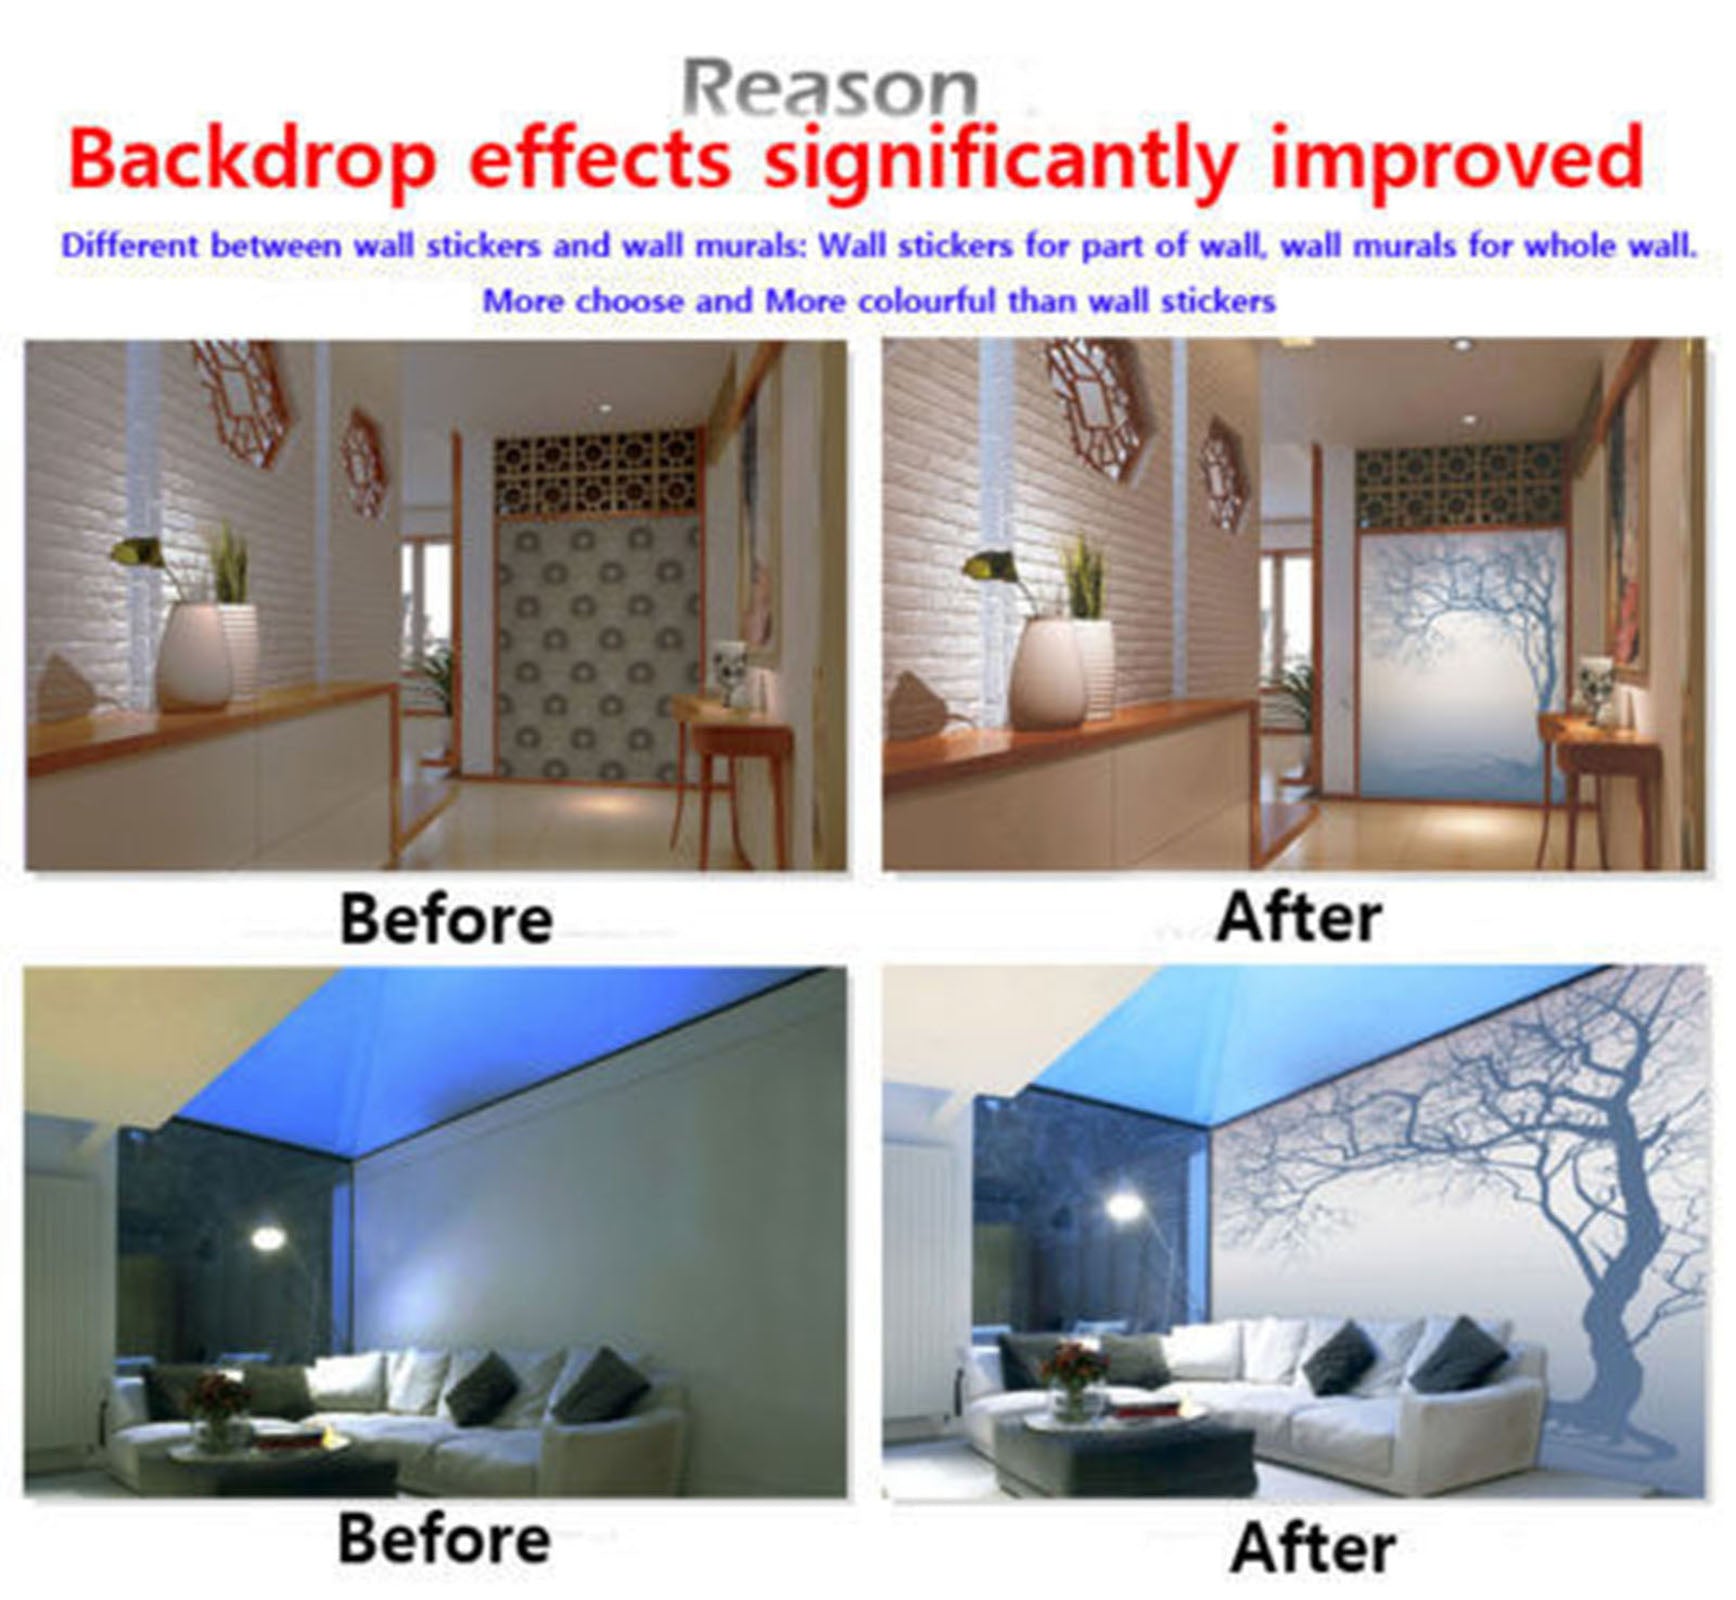 3D Bamboo Leaves 456 Floor Mural  Wallpaper Murals Rug & Mat Print Epoxy waterproof bath floor